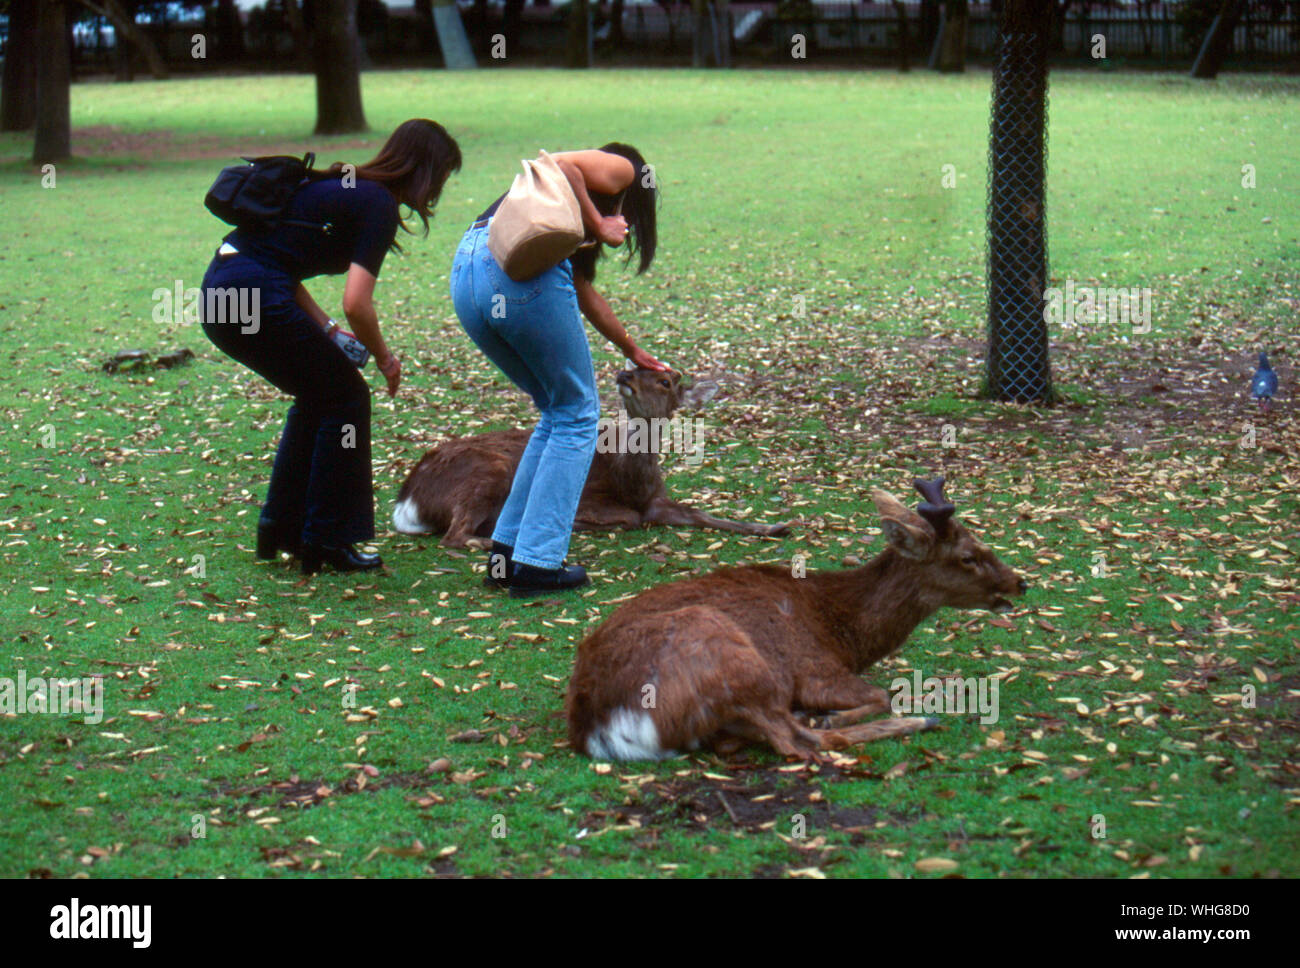 Full Length Of Women Caressing Deer Sitting On Field Stock Photo